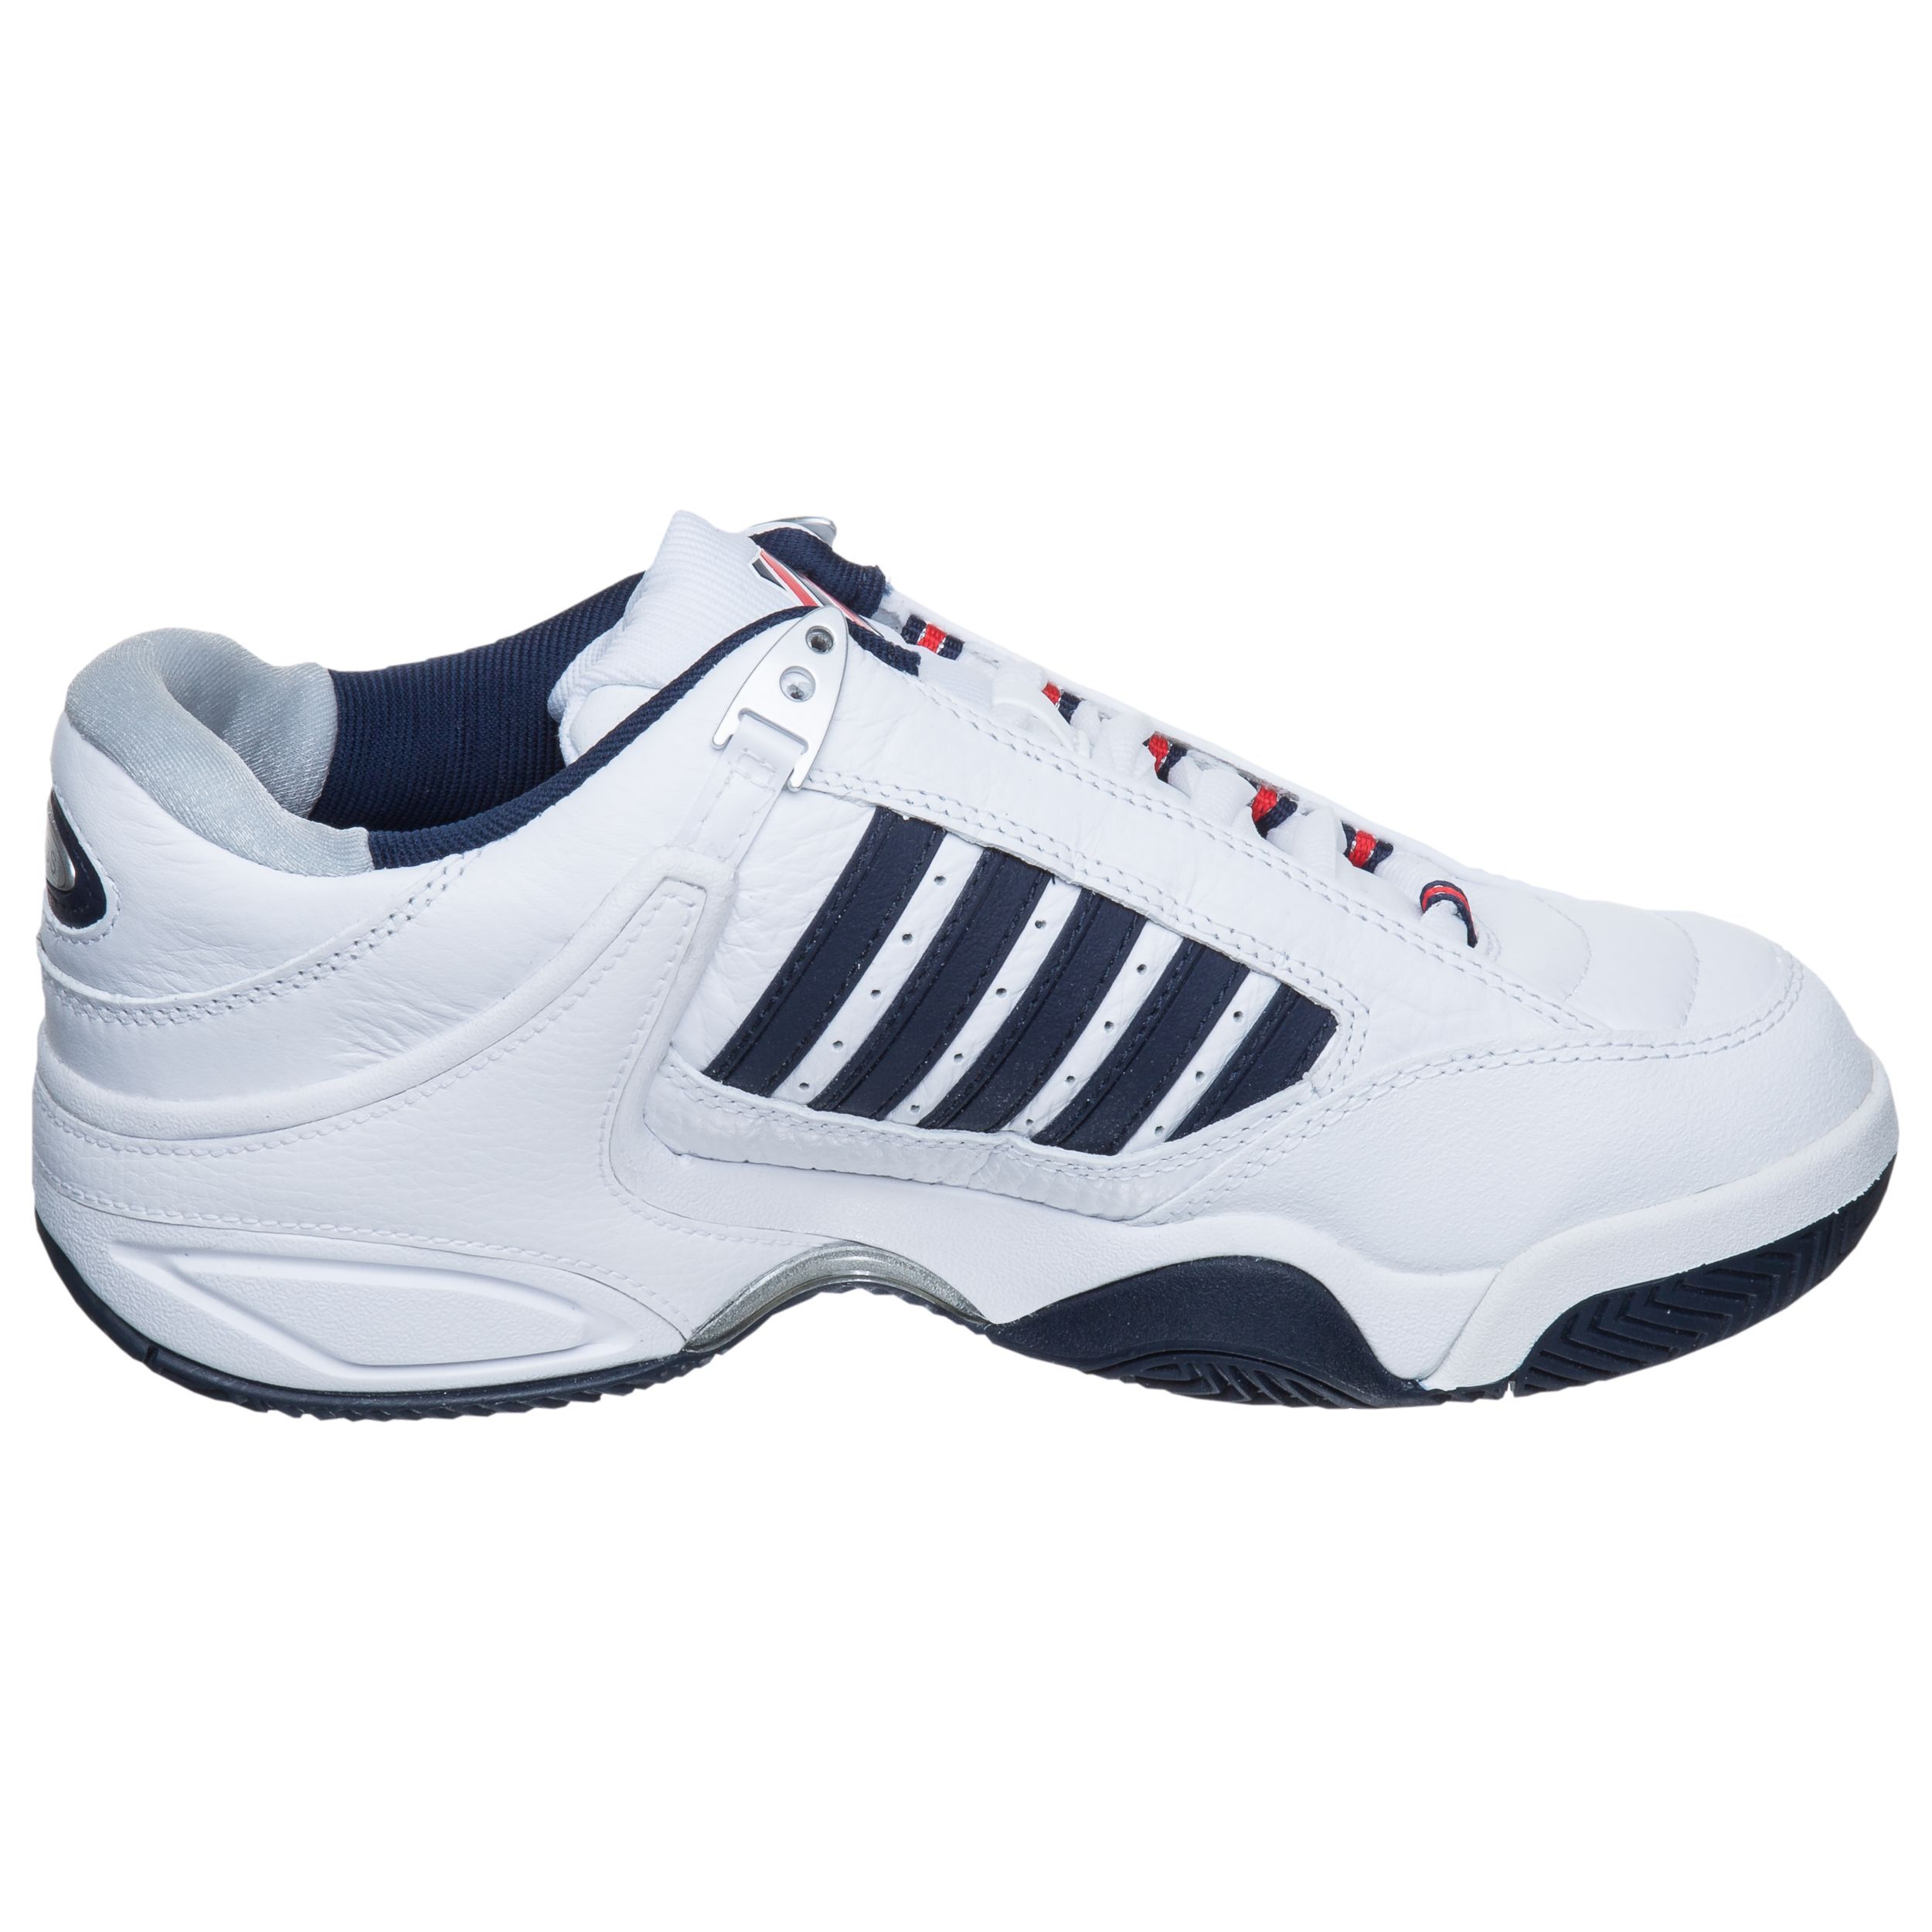 K Swiss Defier RS Homme Blanc Classique En Cuir Bleu Tennis Baskets Chaussures UK 8-14 